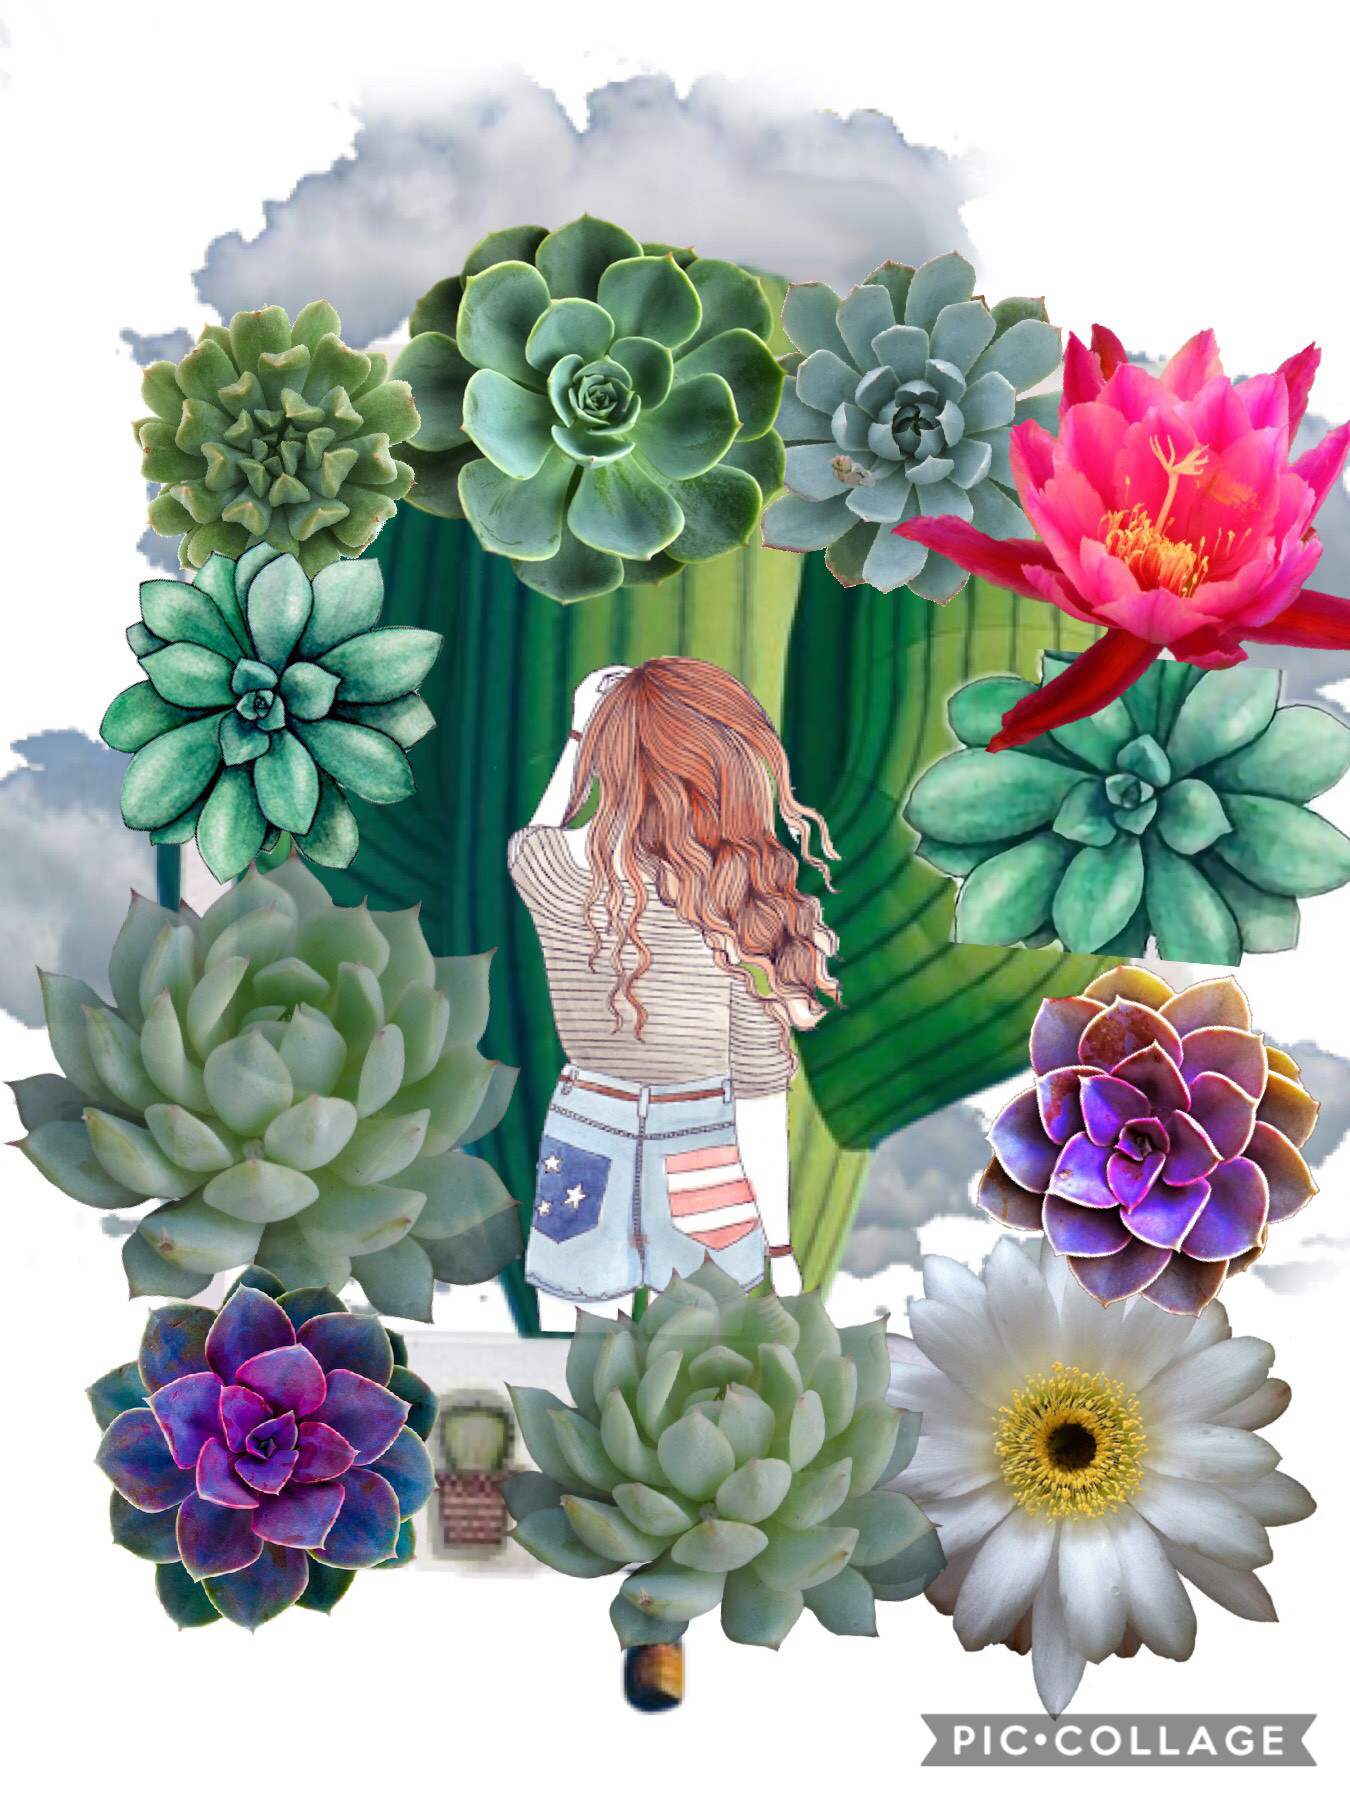 Tap


Cactus flower girl ❤️❤️❤️❤️ love the open world 🌎 